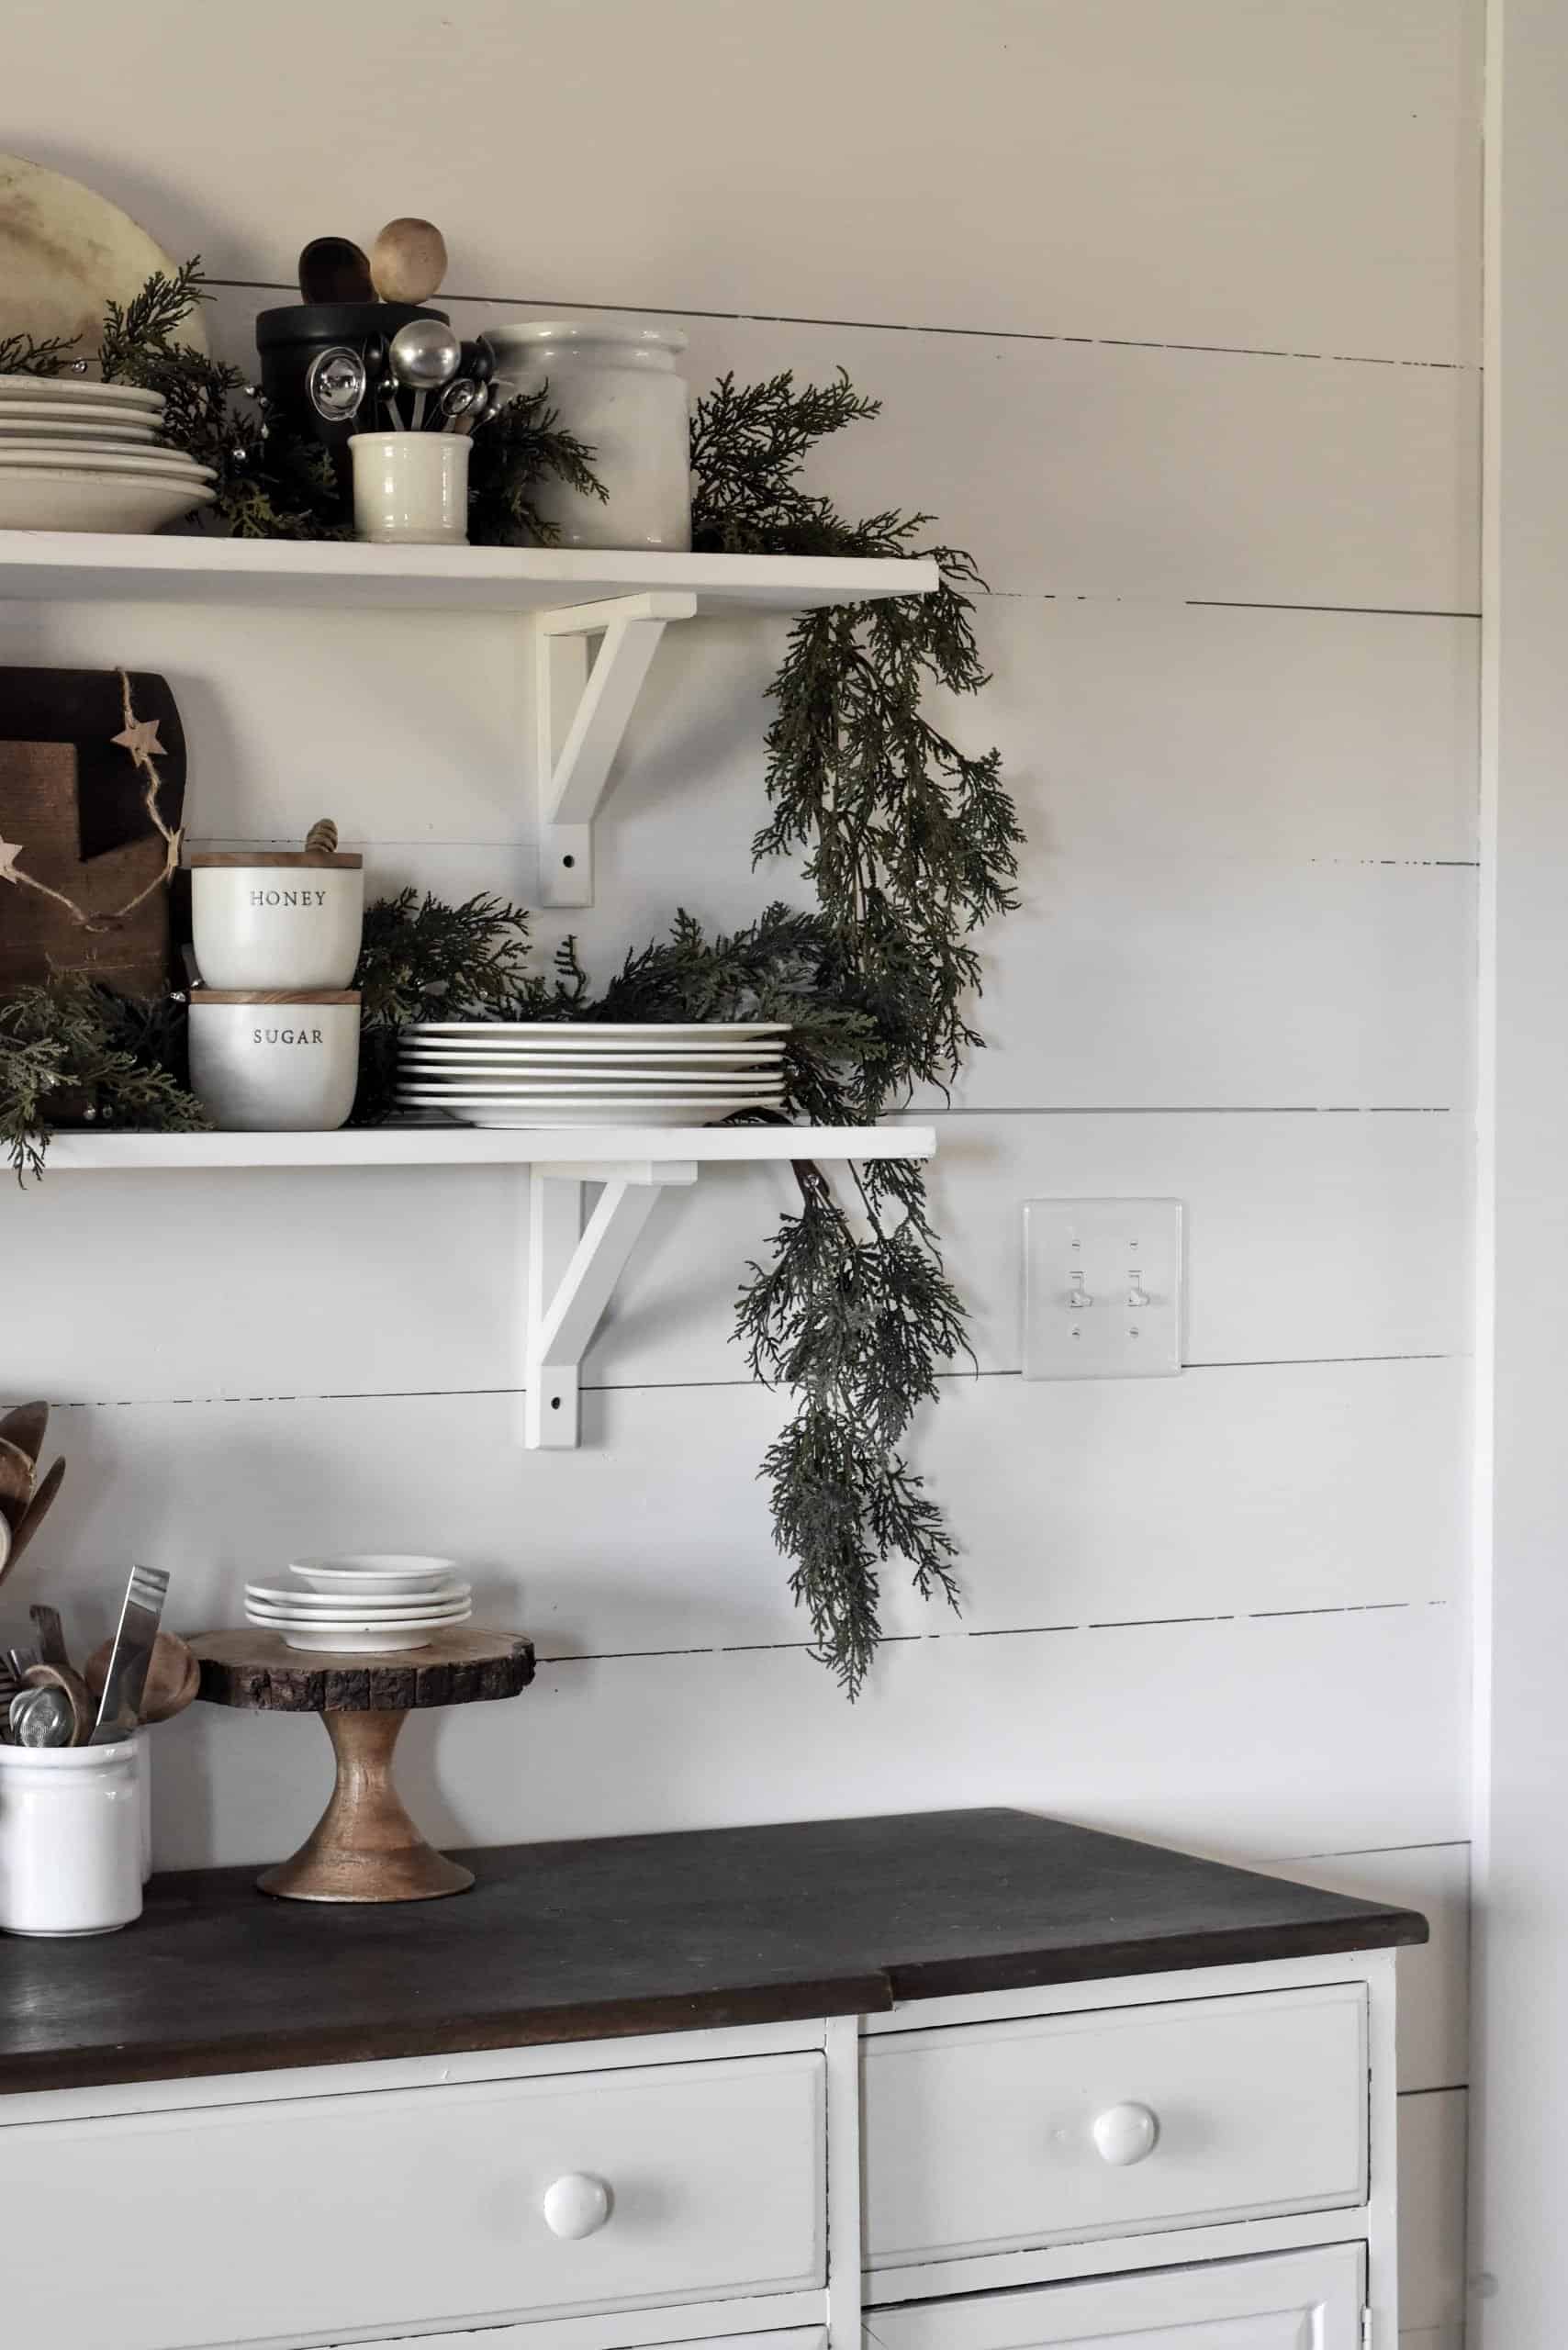 https://erdtknyop8g.exactdn.com/wp-content/uploads/2019/12/Christmas-Kitchen-Shelves-scaled.jpg?strip=all&lossy=1&ssl=1